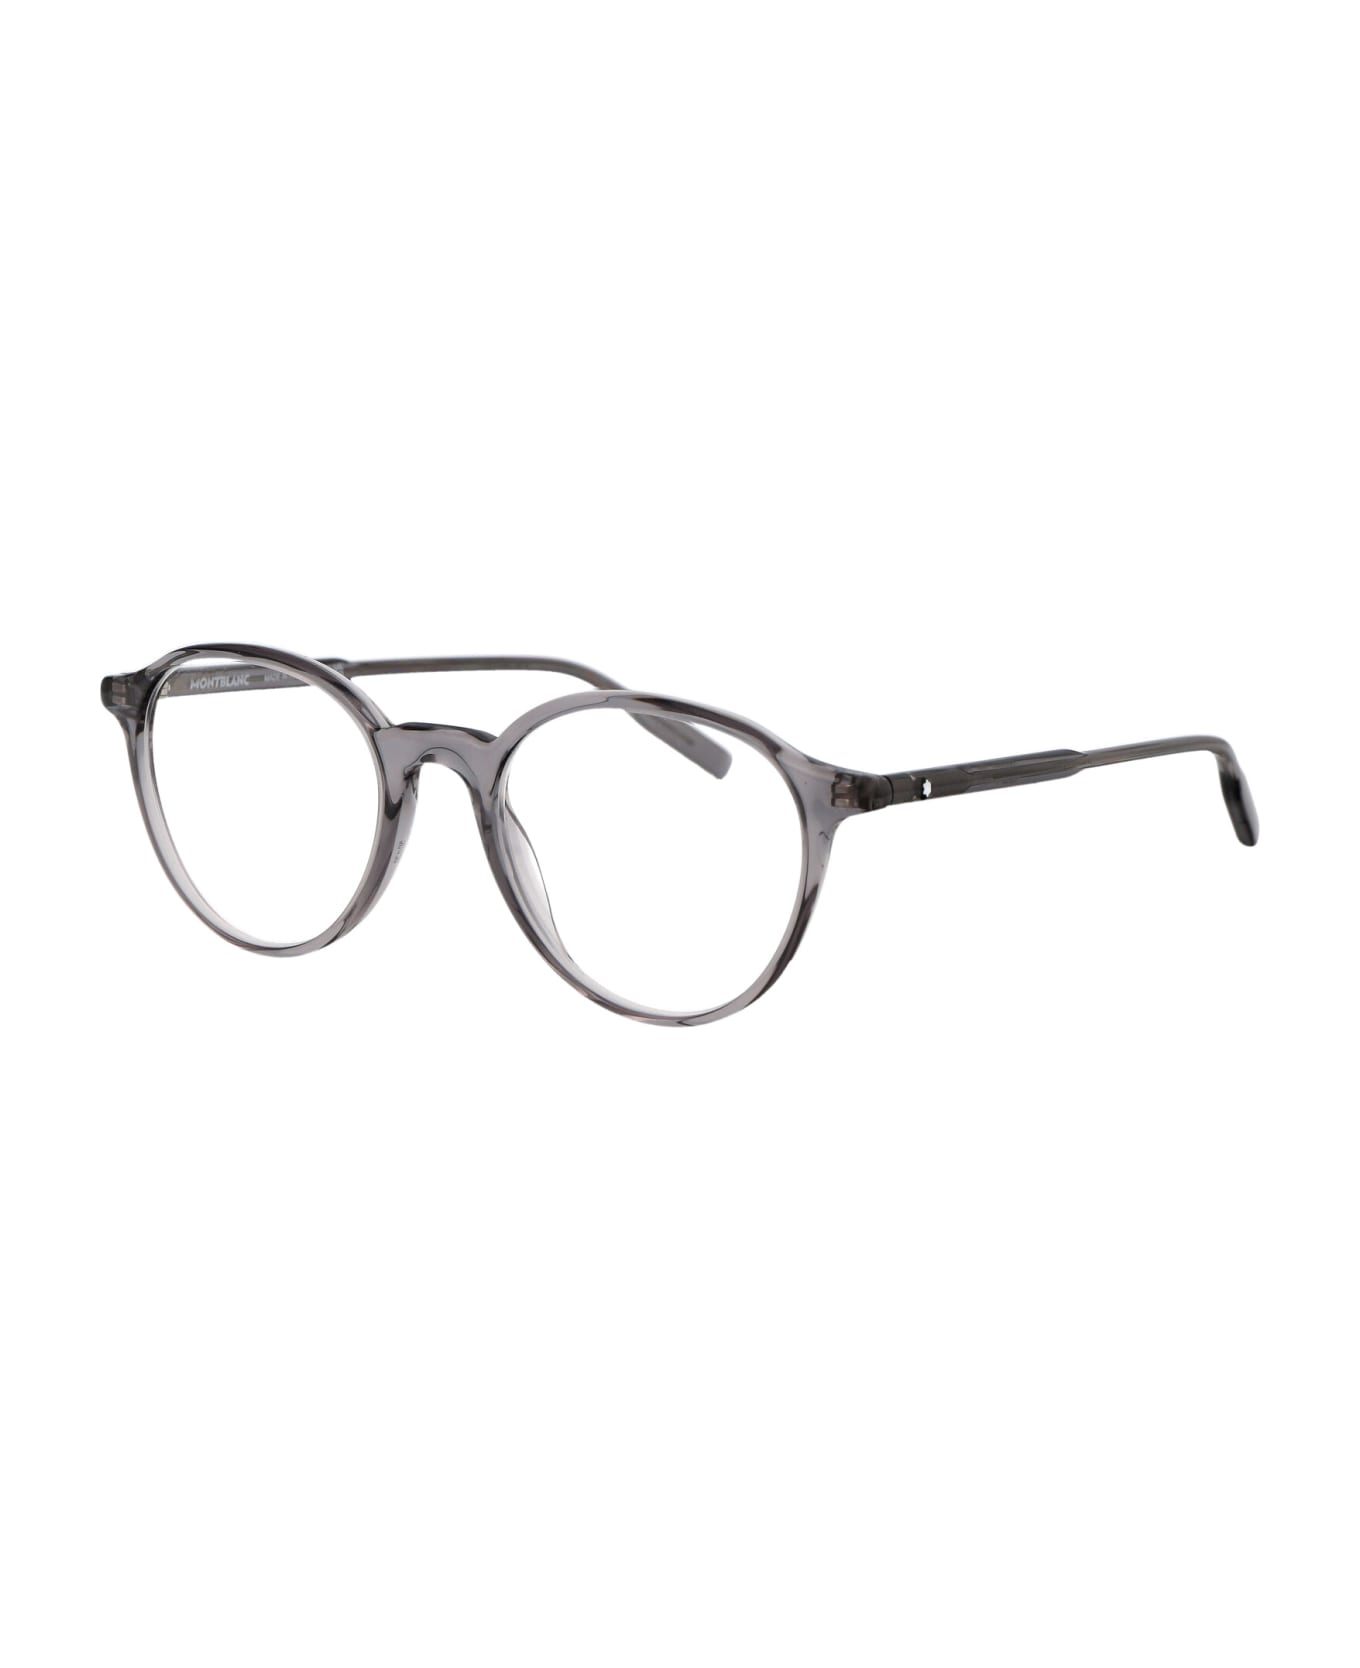 Montblanc Mb0291o Glasses - 003 GREY GREY TRANSPARENT アイウェア